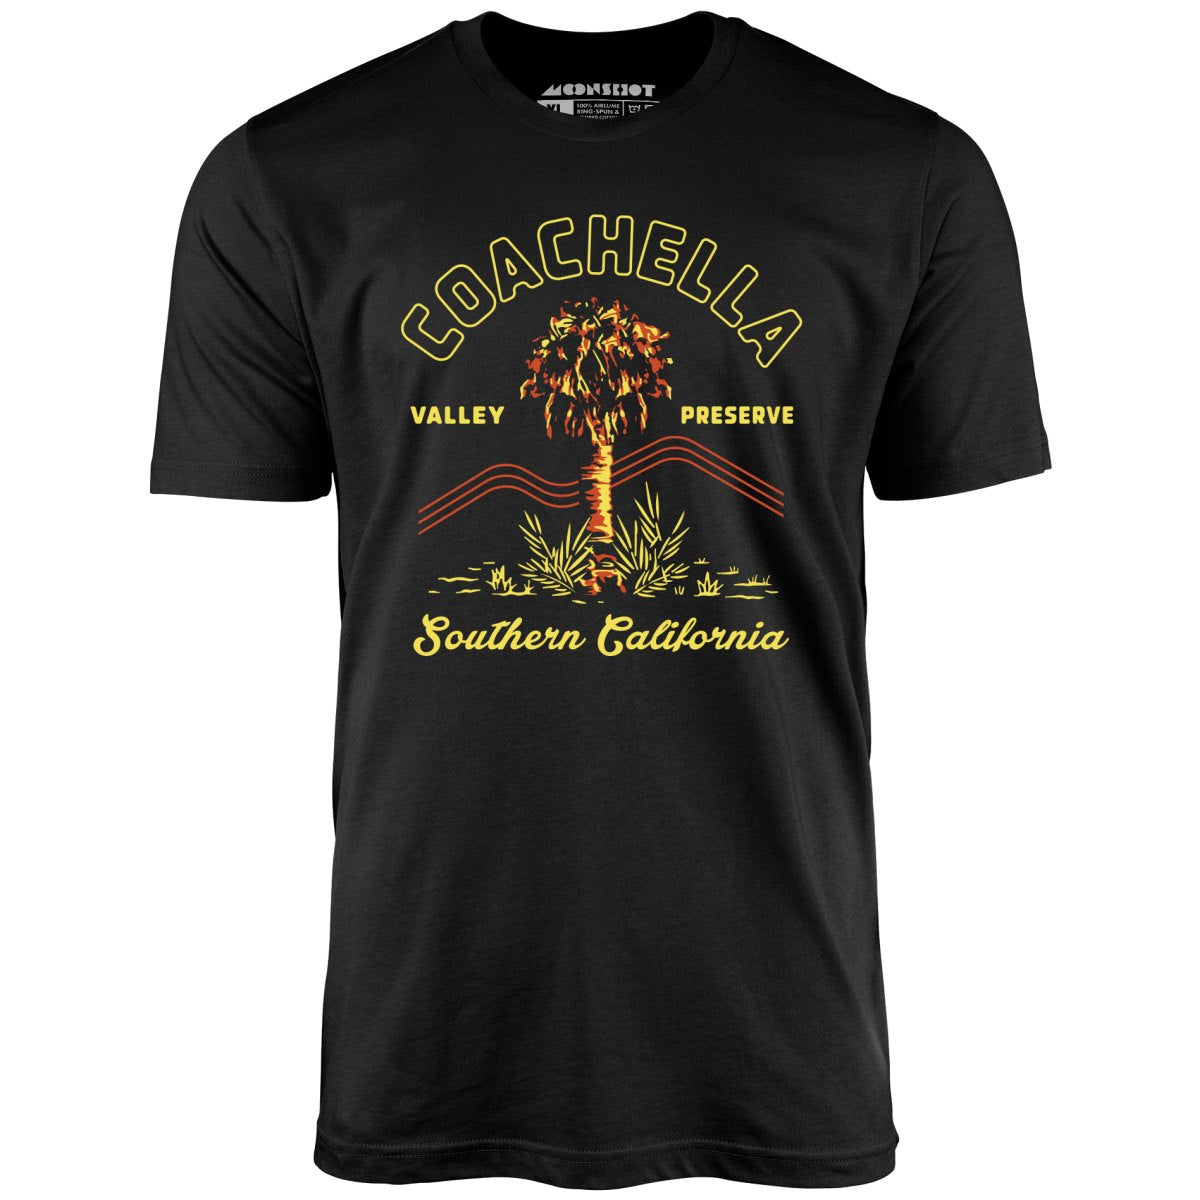 Coachella Valley Preserve - Southern California - Unisex T-Shirt